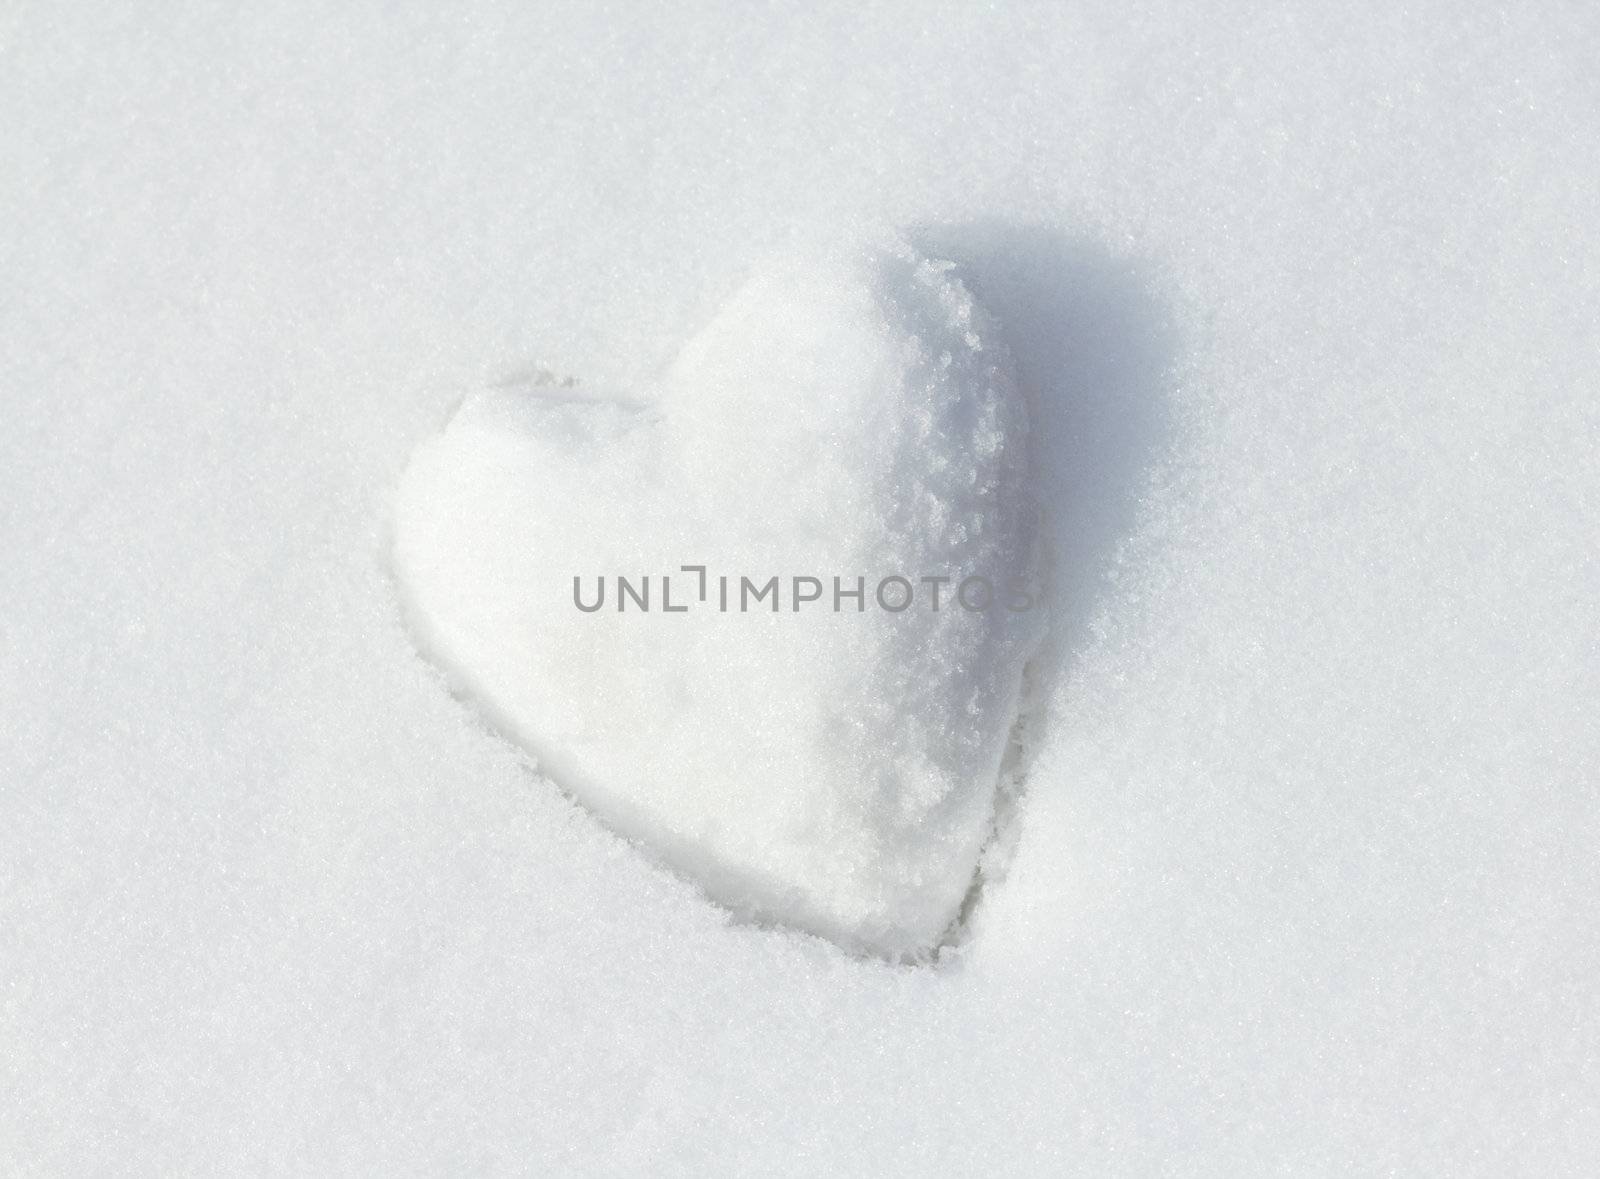 Snow Heart. Shallow depth of field.